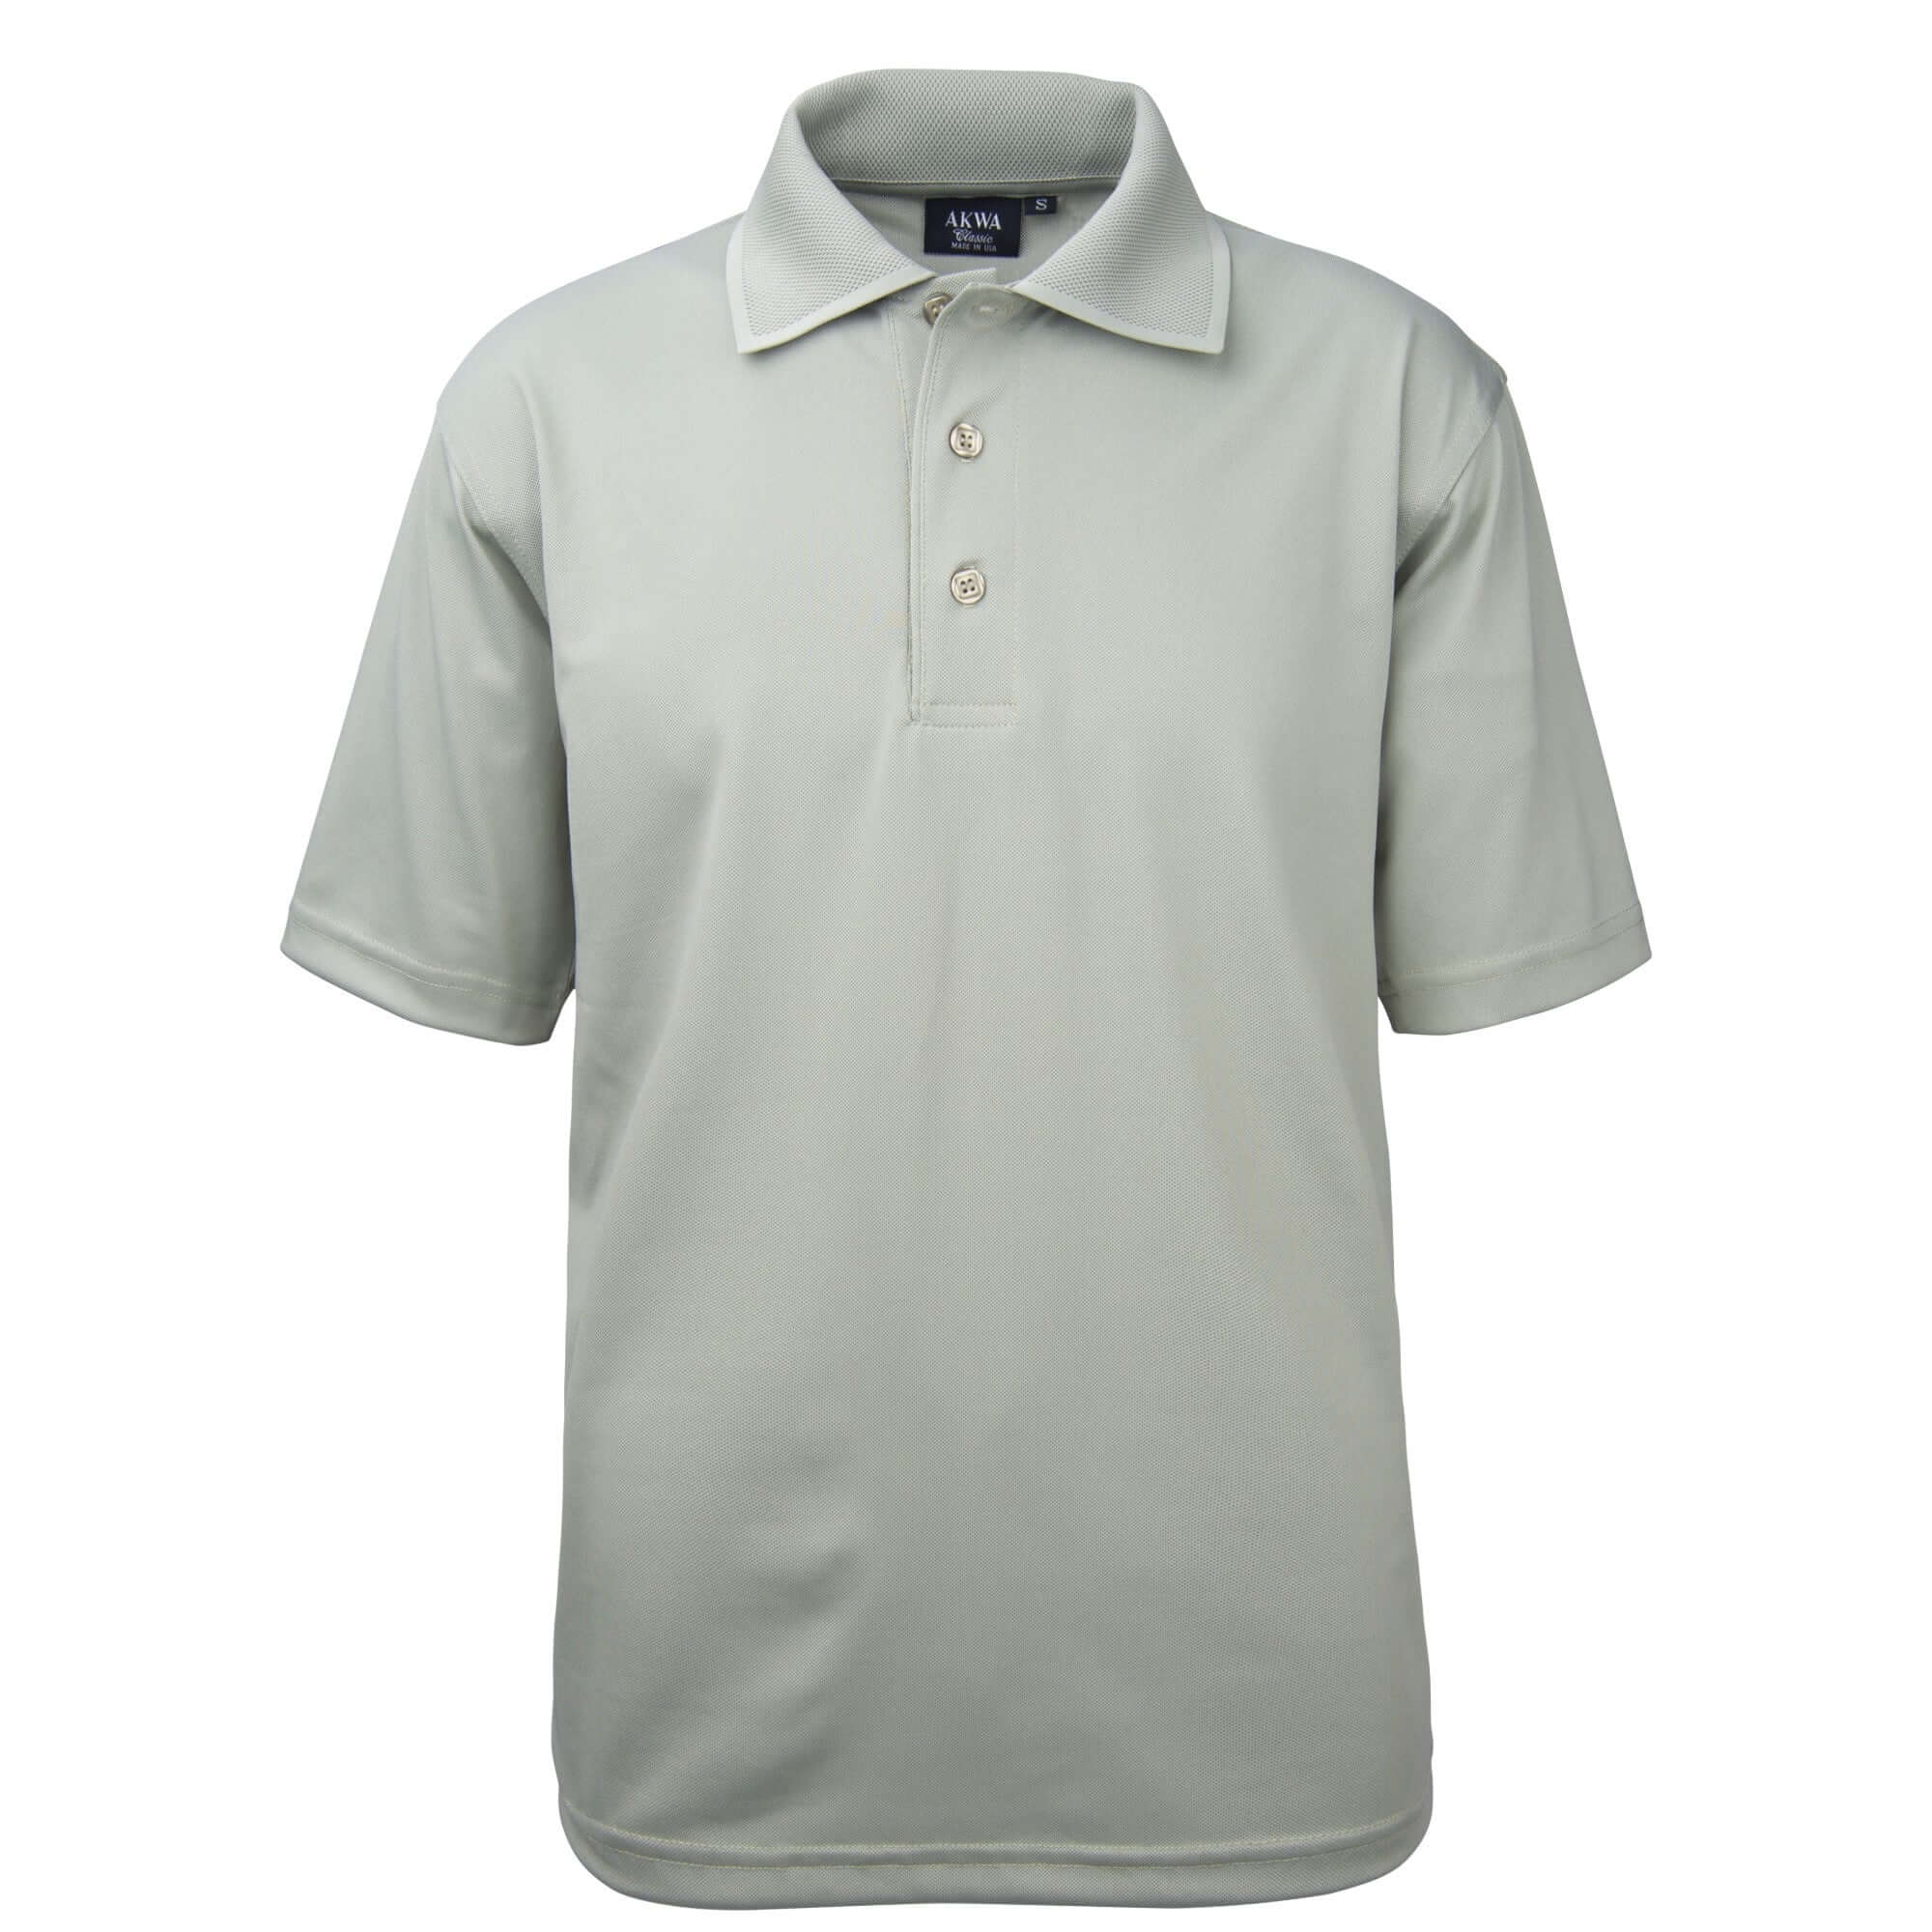 Men's Made in USA Tech Polo Shirt color_sage - the flag shirt